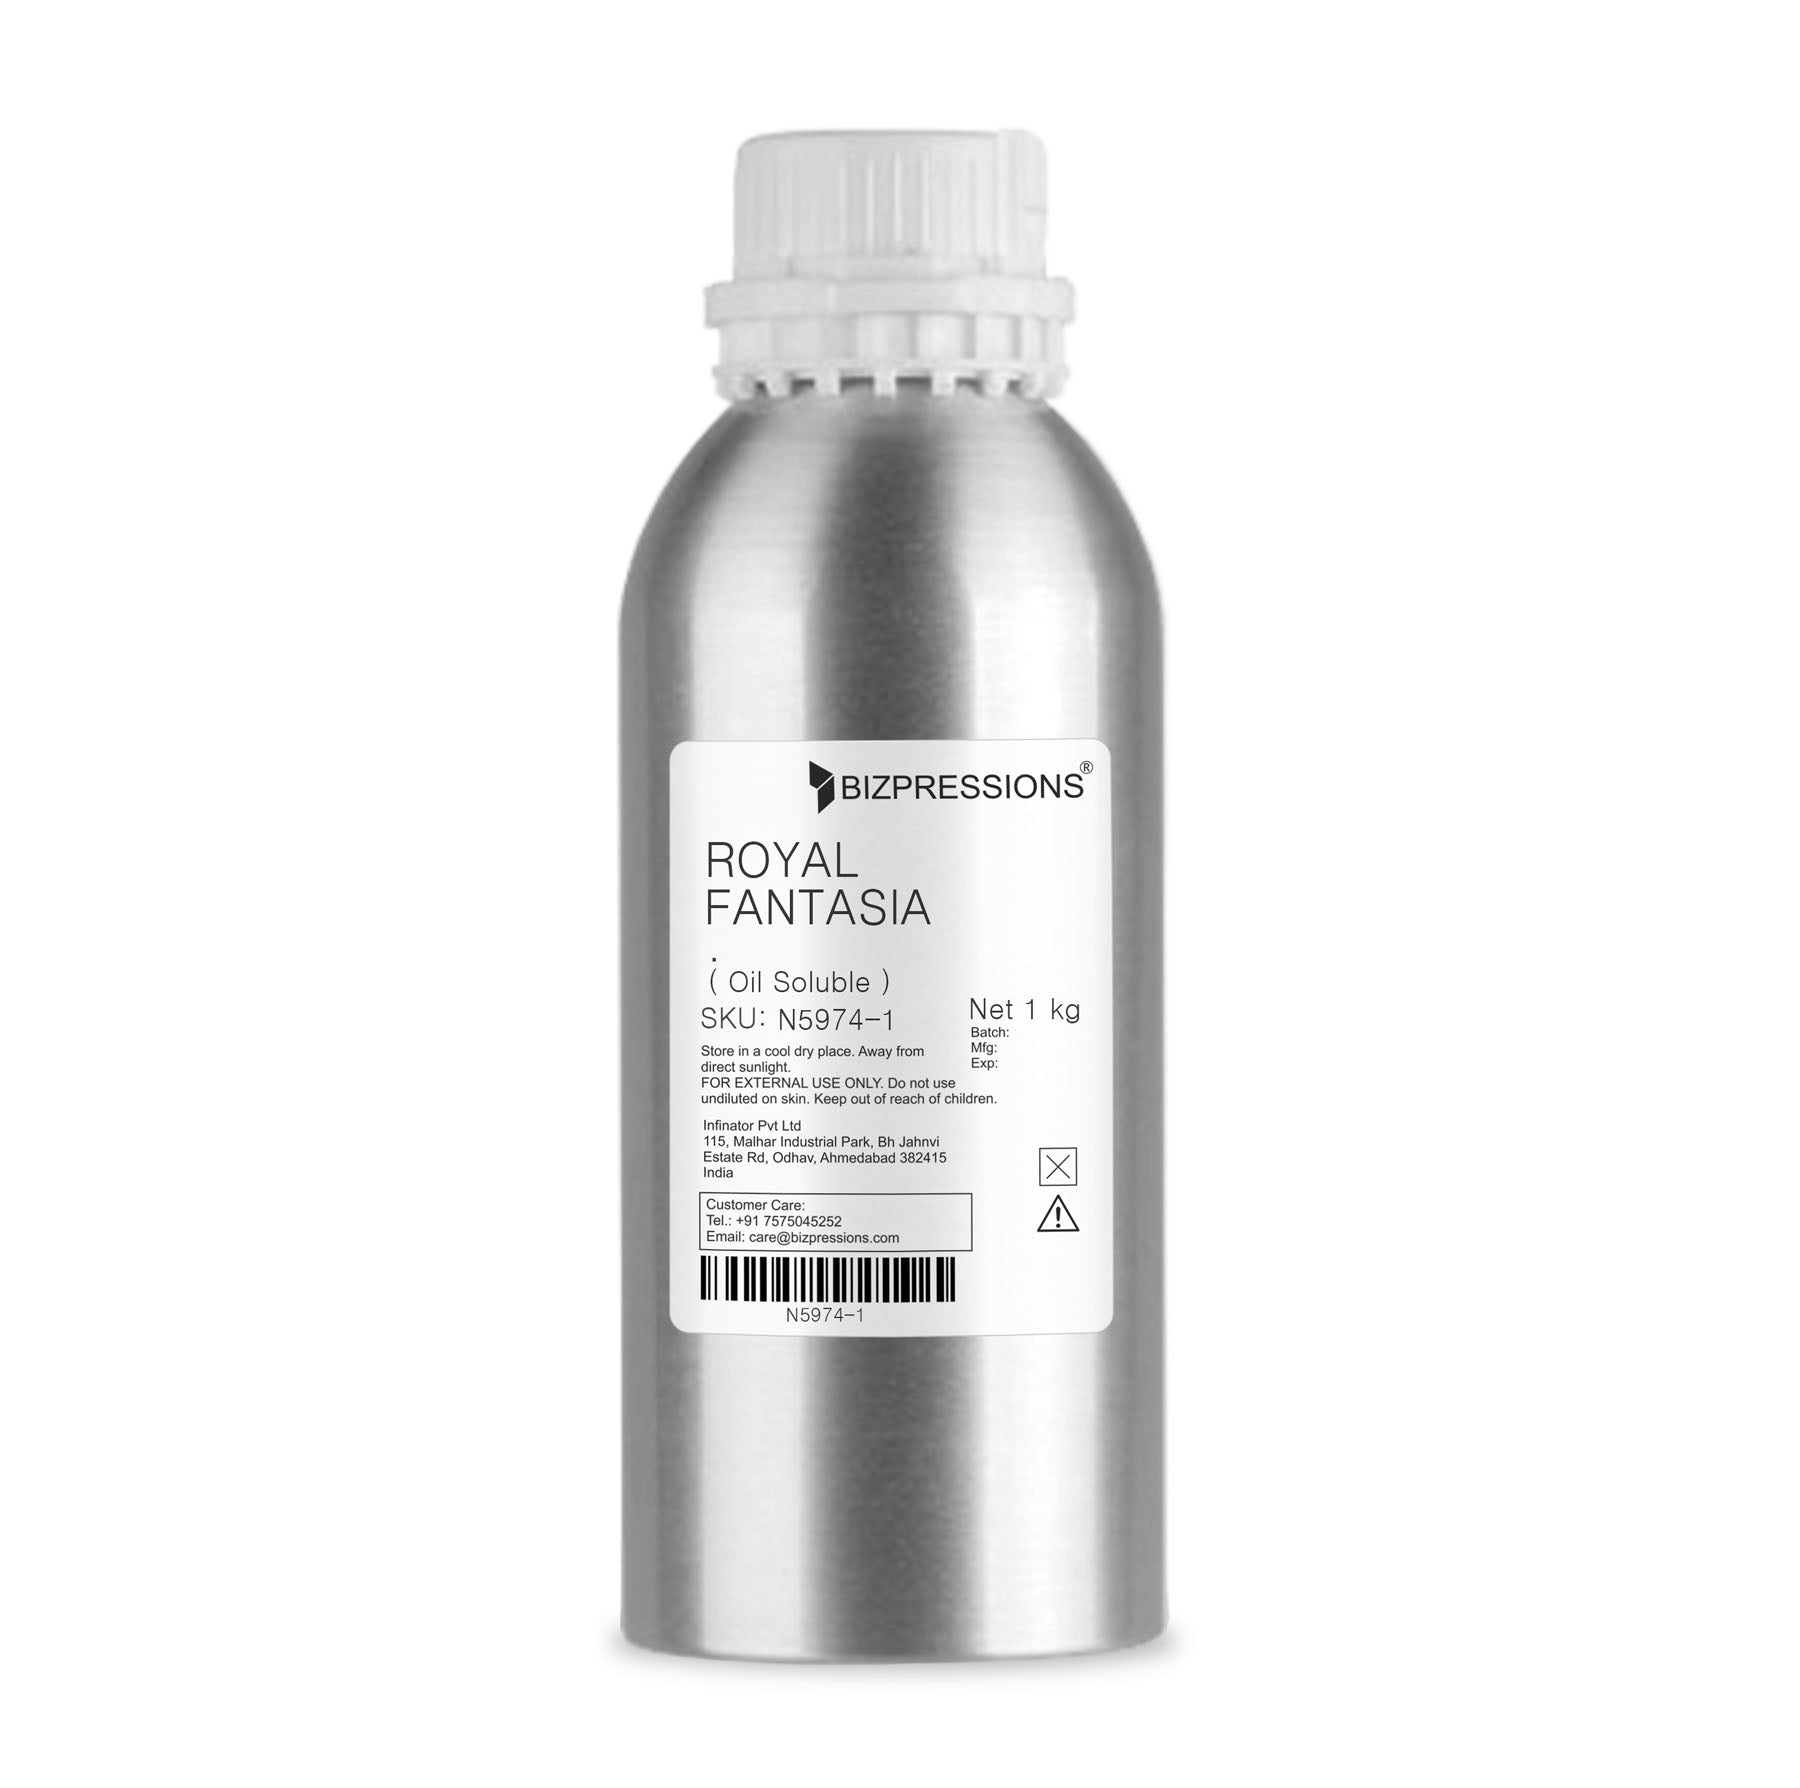 ROYAL FANTASIA - Fragrance ( Oil Soluble ) - 1 kg